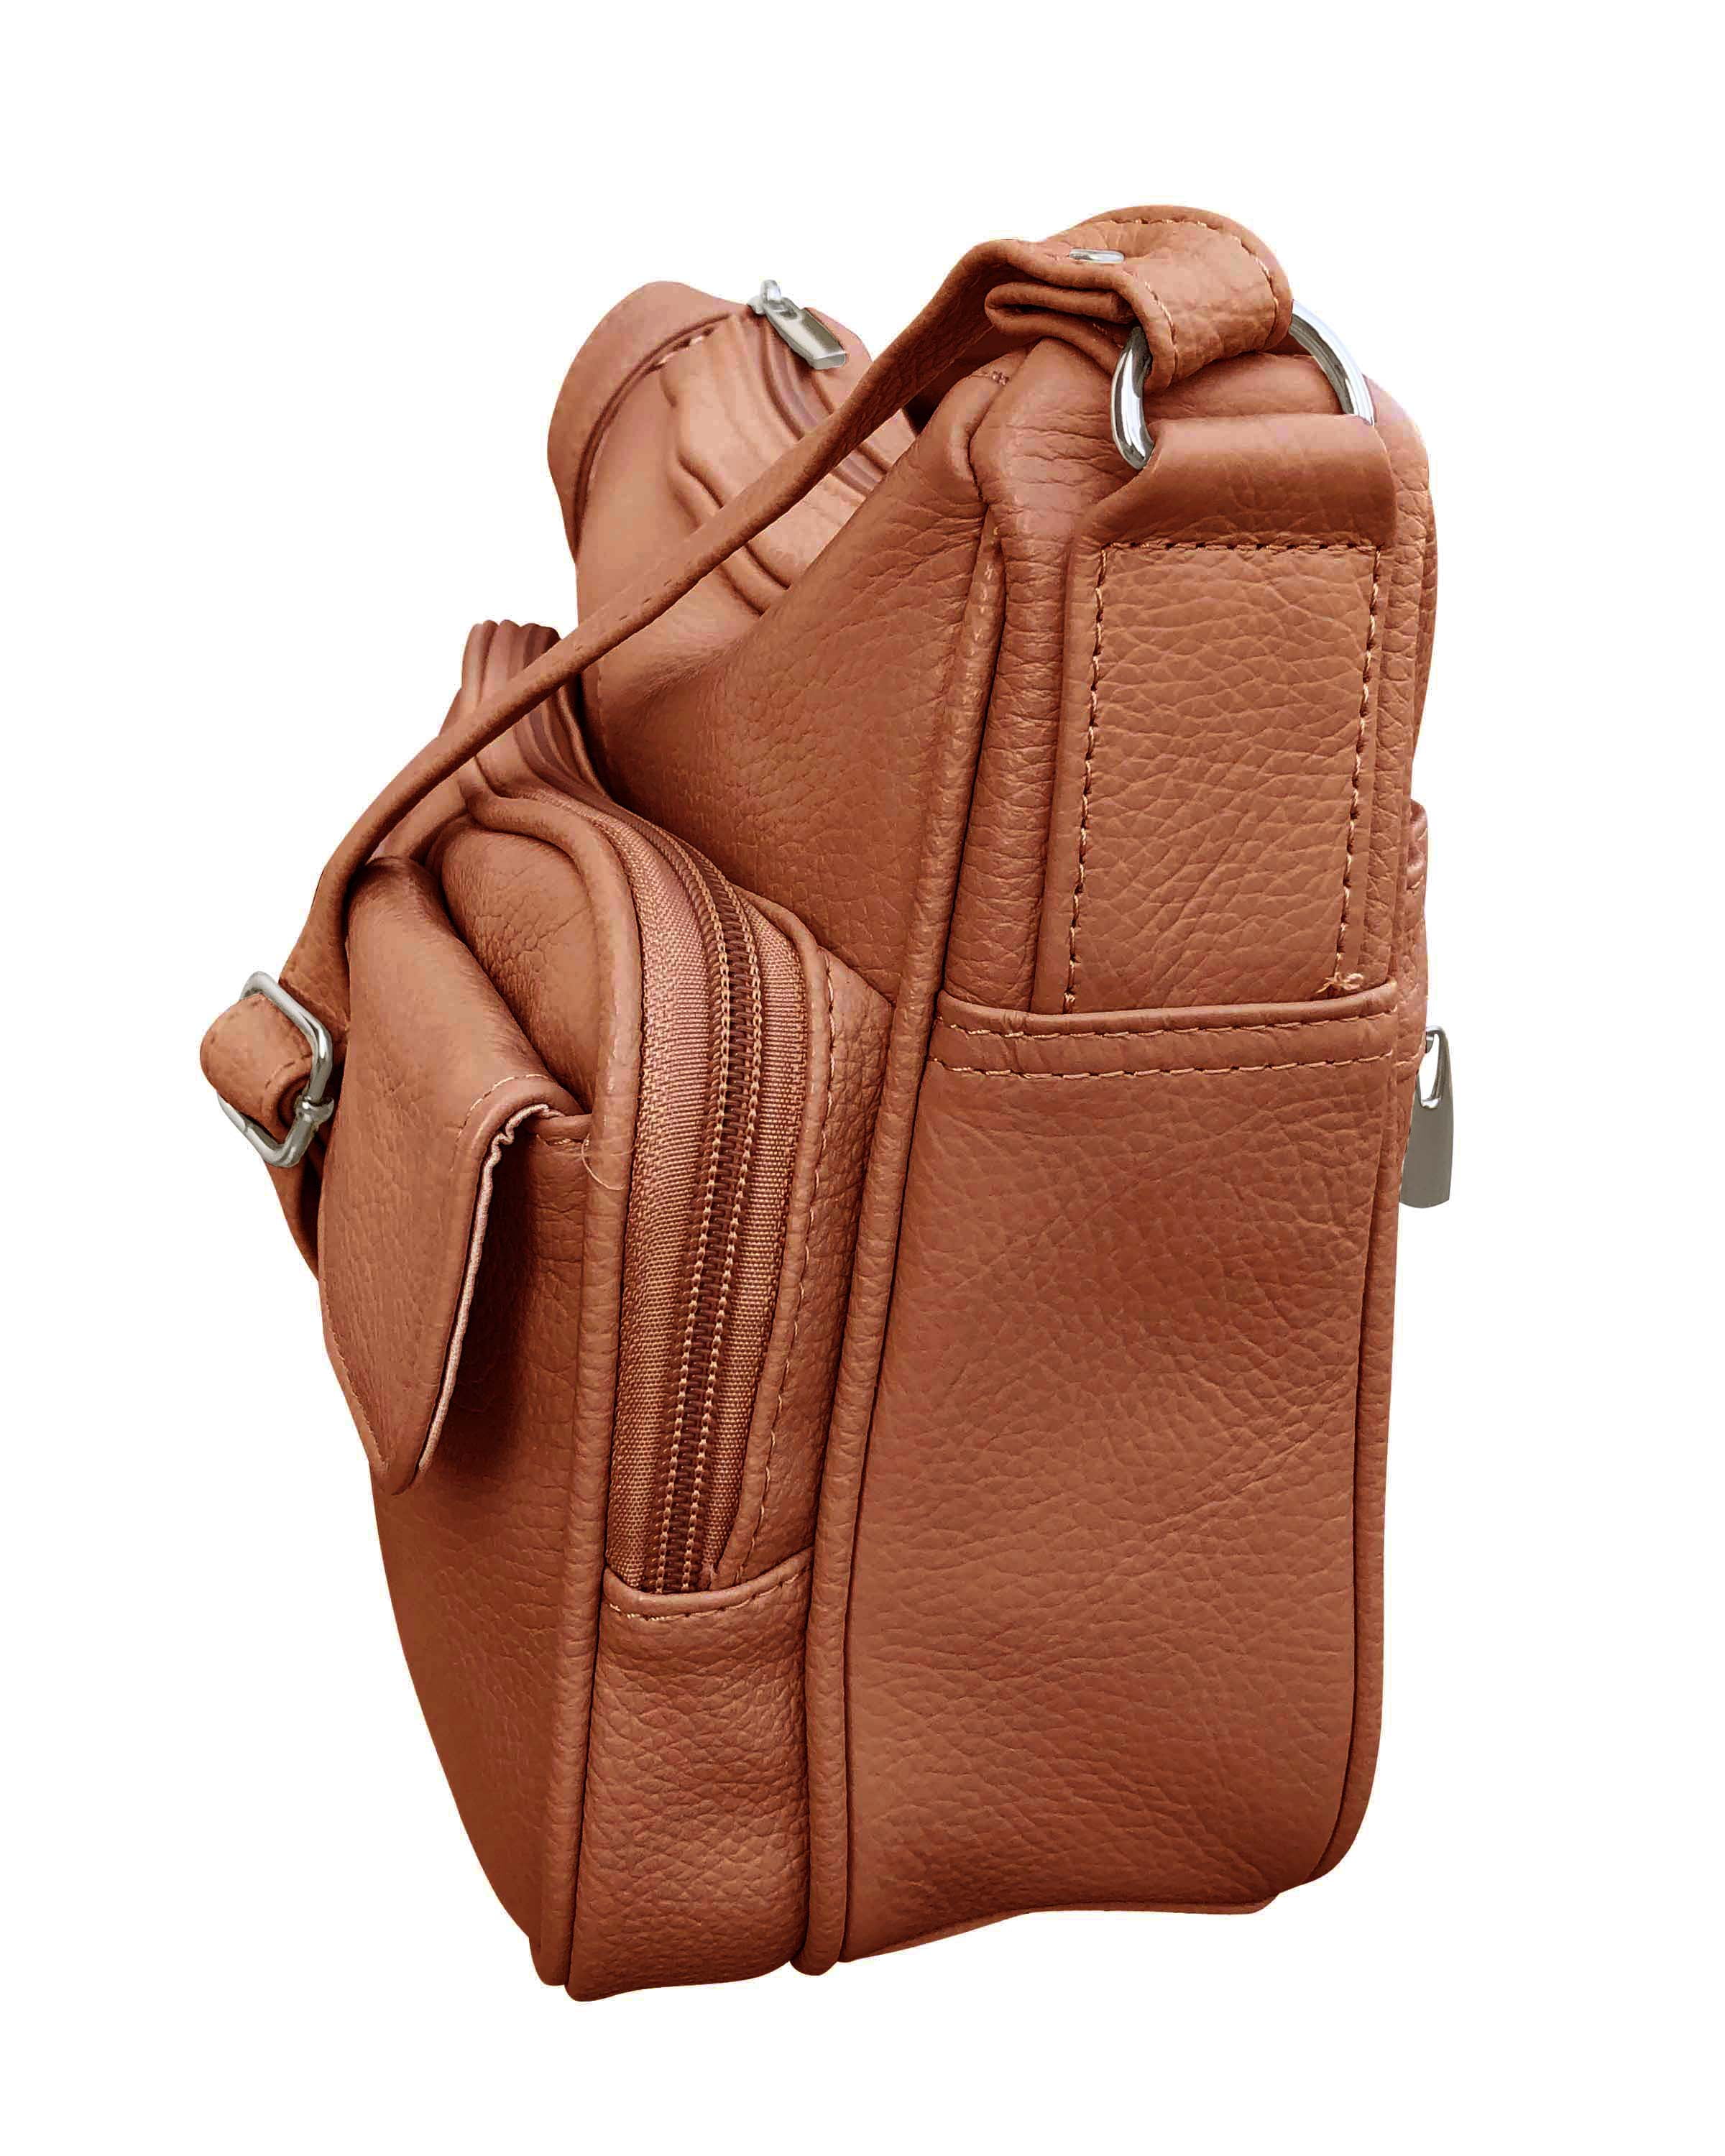 Leather Crossbody Wallet Pielino Brown Purse w Shoulder Strap